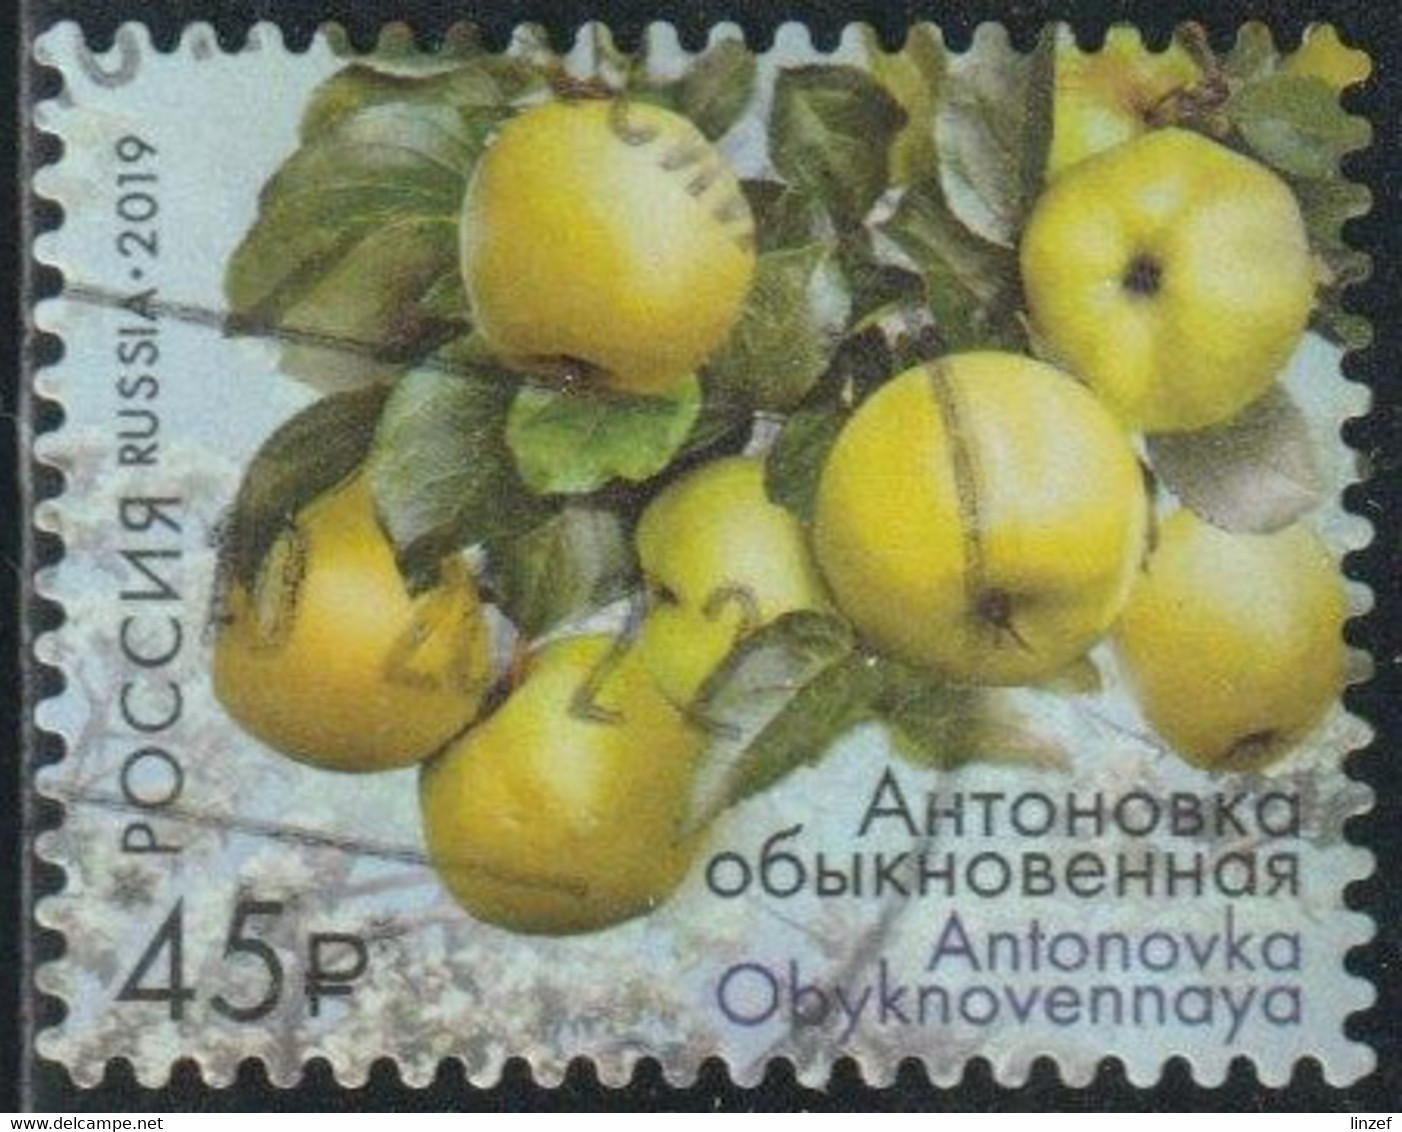 Russie 2019 Yv. N°8021 - Pommes De Russie - Antonovka Obyknovennaya- Oblitéré - Used Stamps